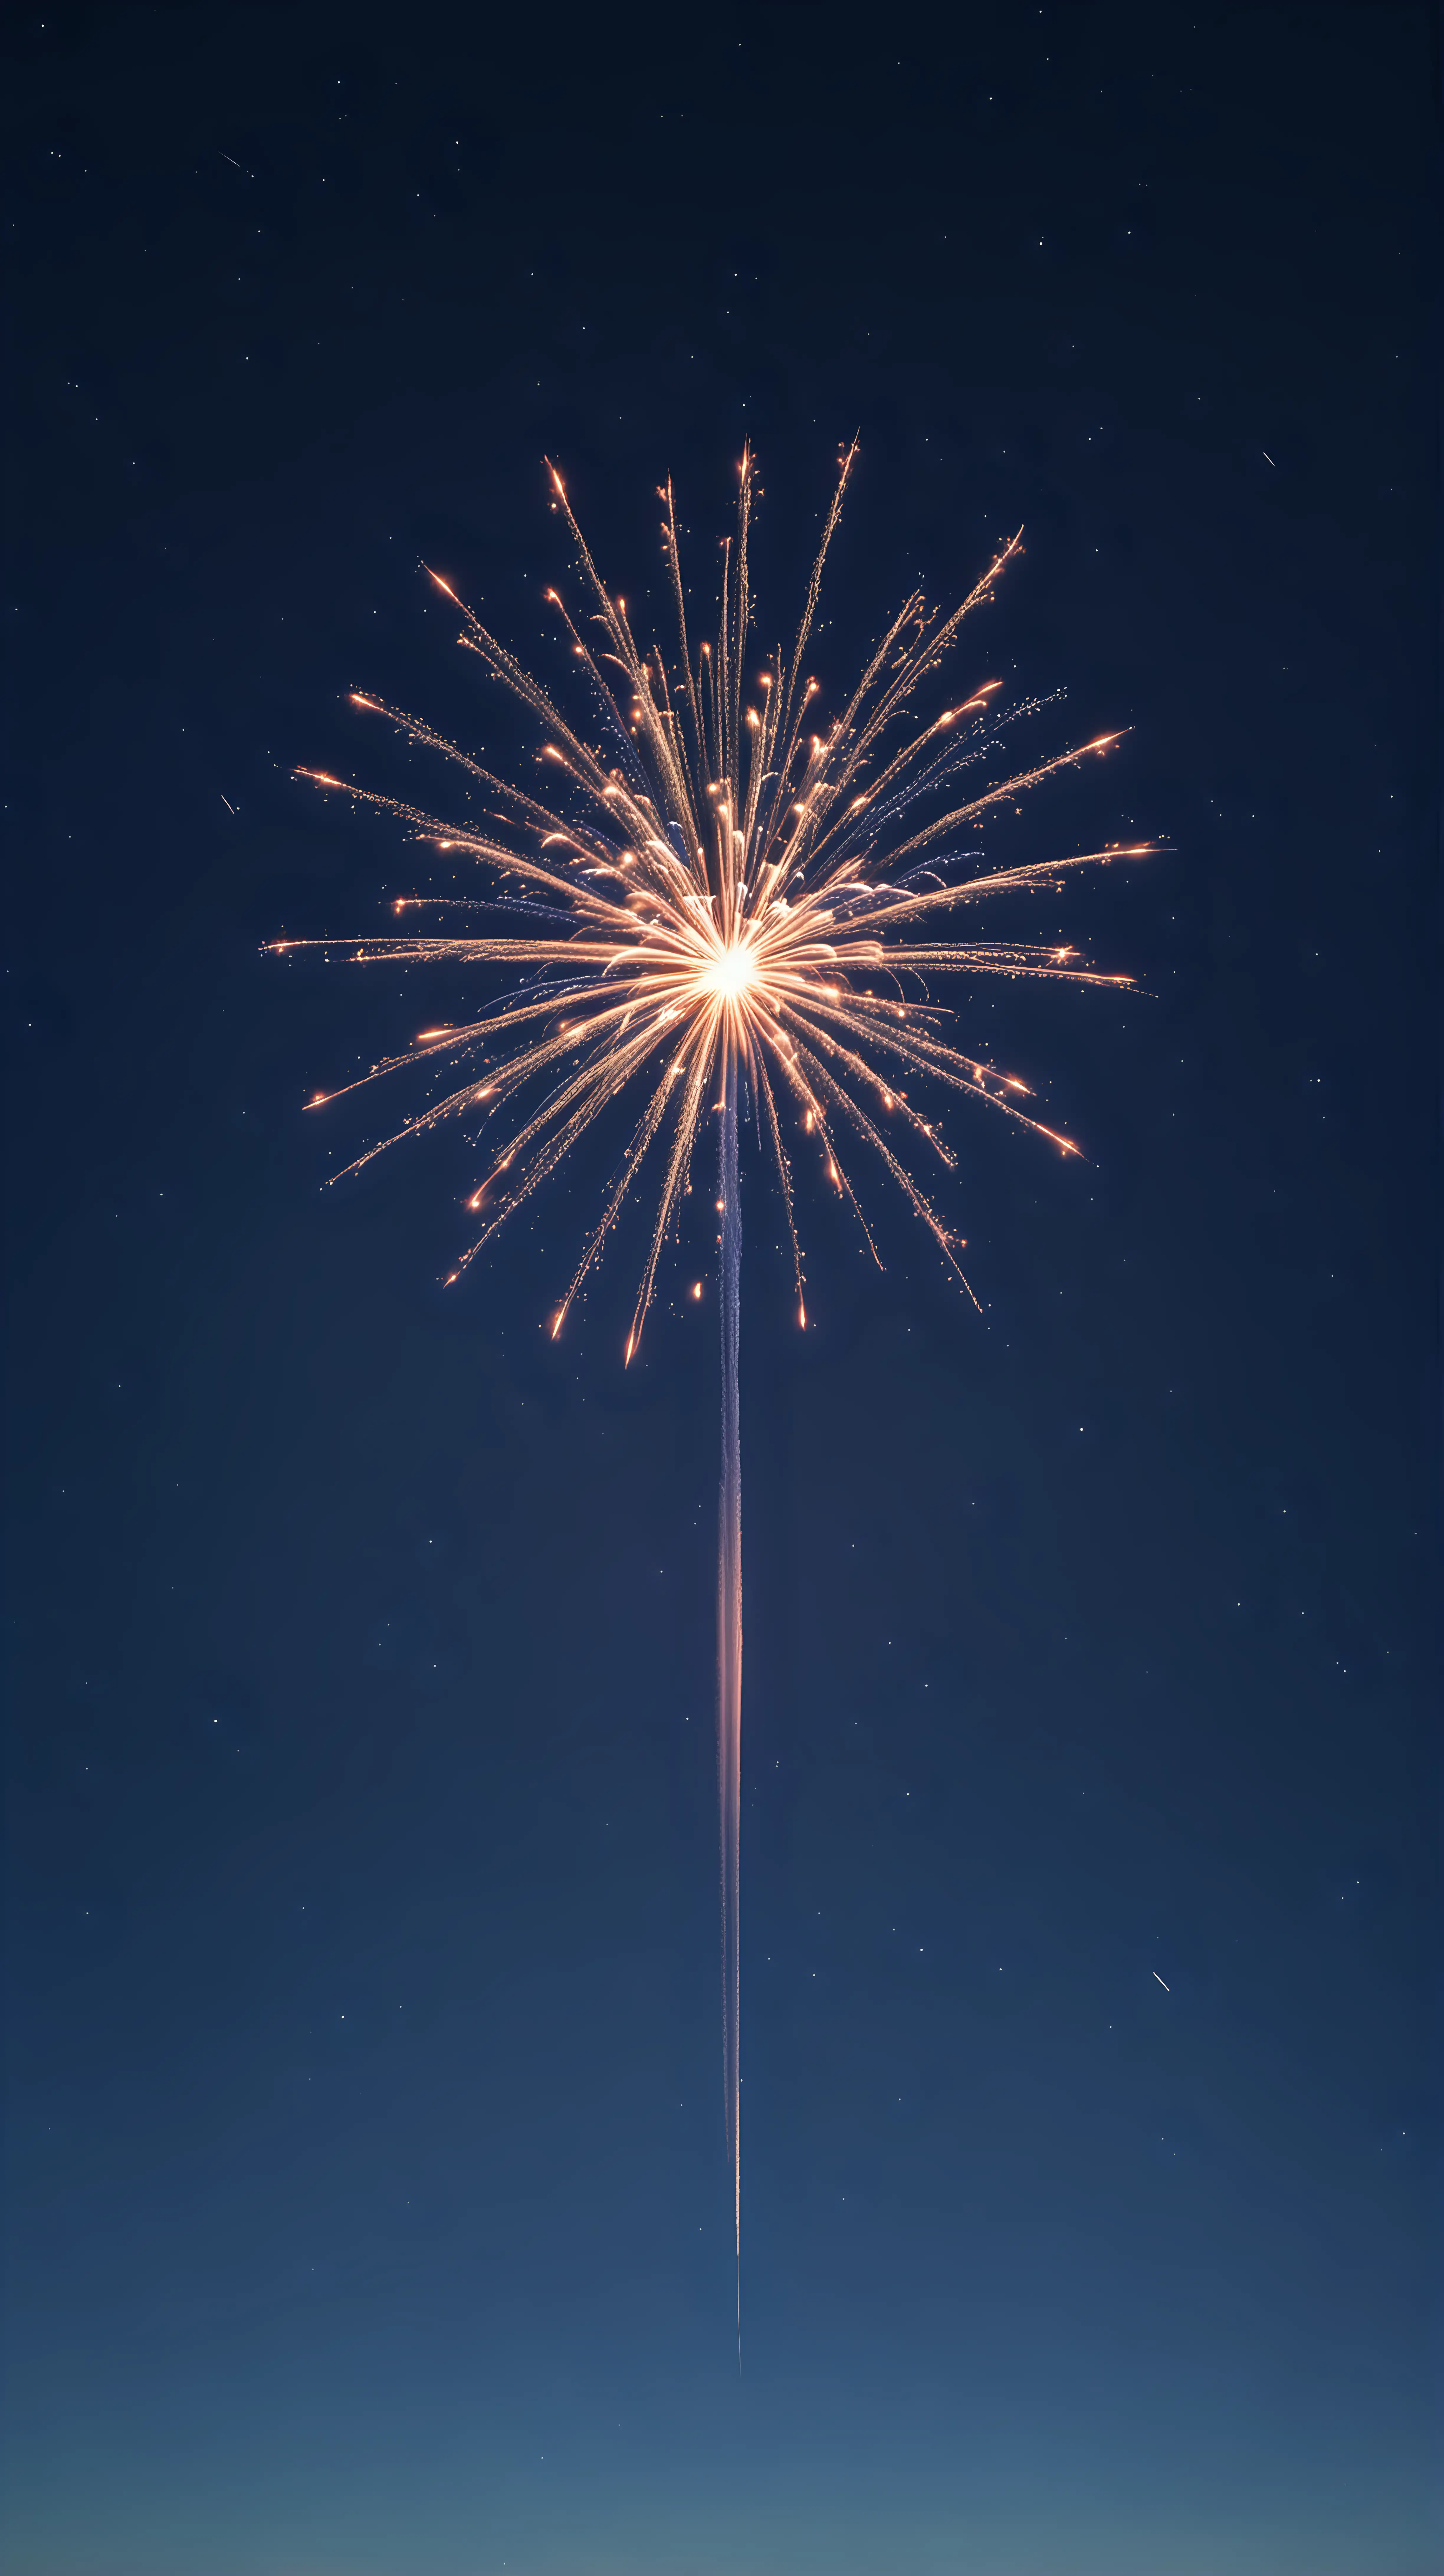 Vibrant Small Firework Bursting in Bold Blue Night Sky